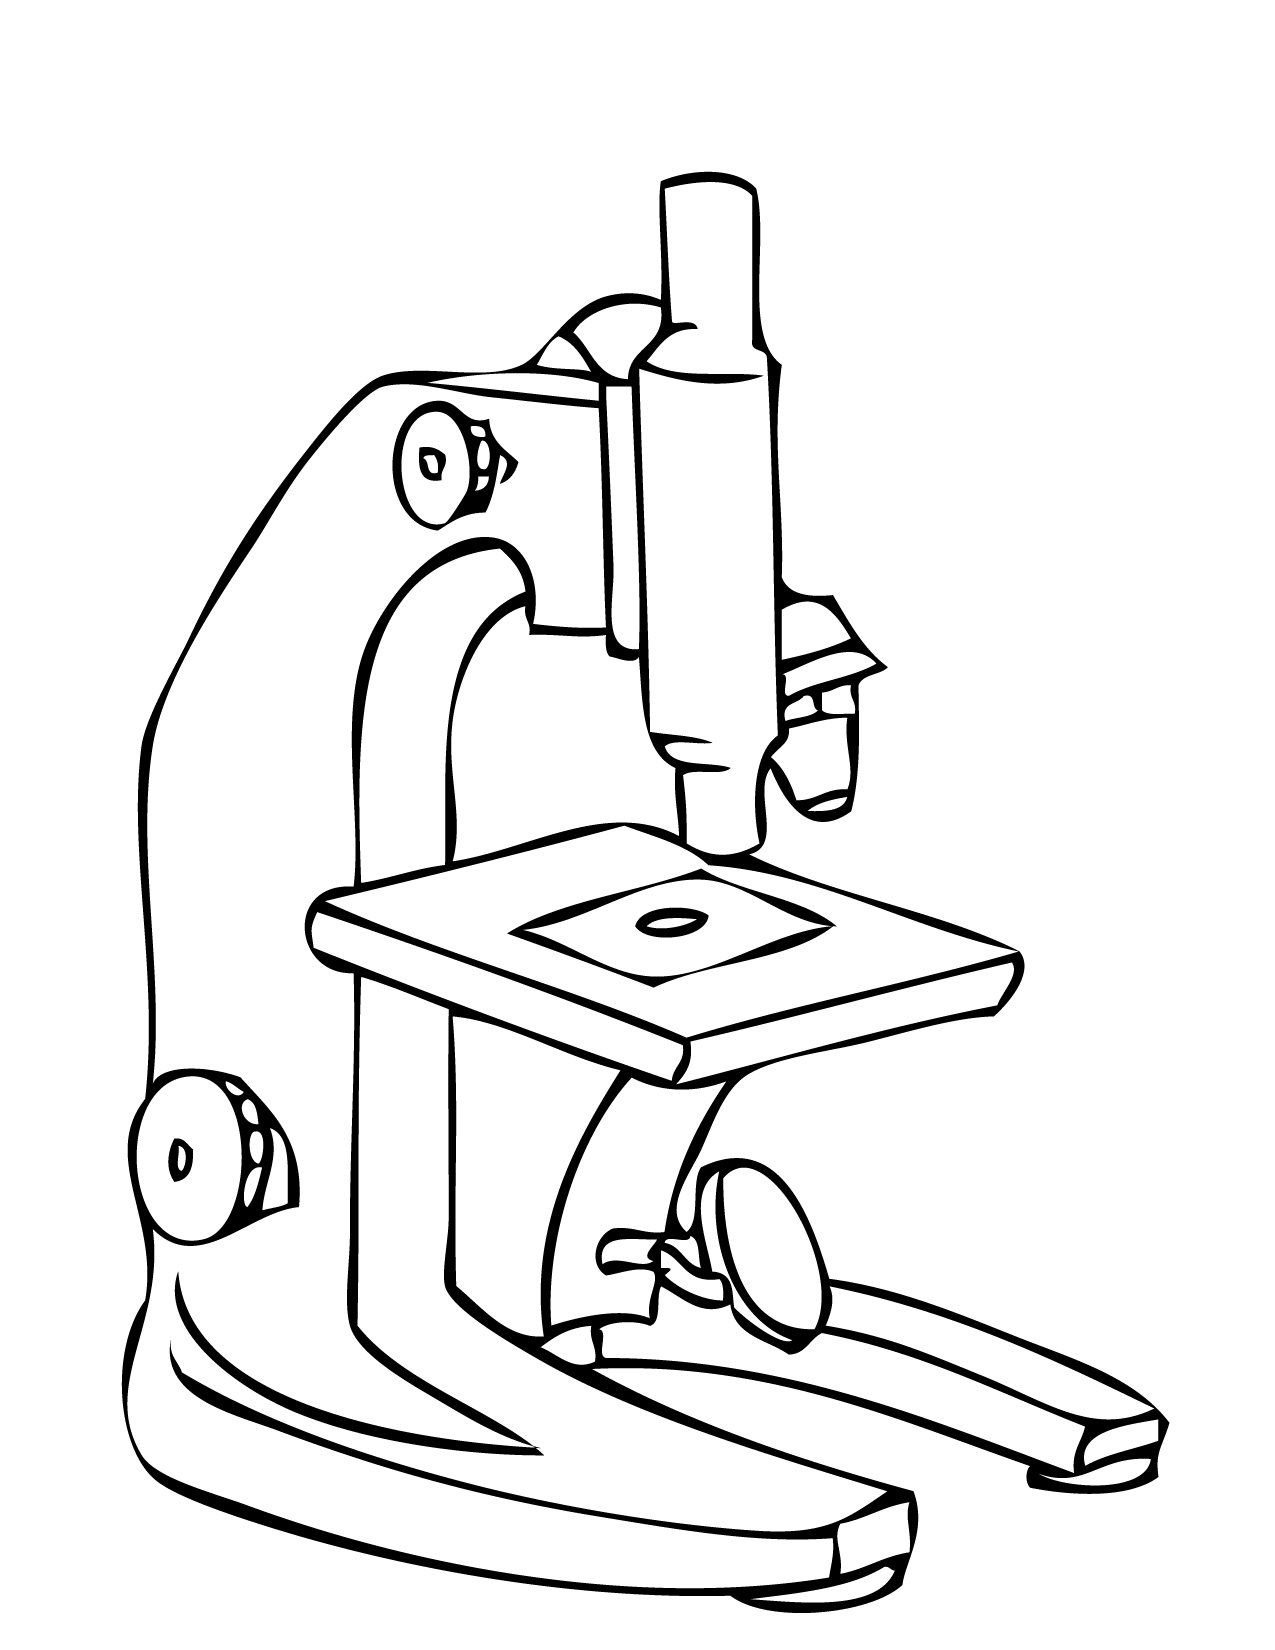 Simple microscope clipart clipartfest